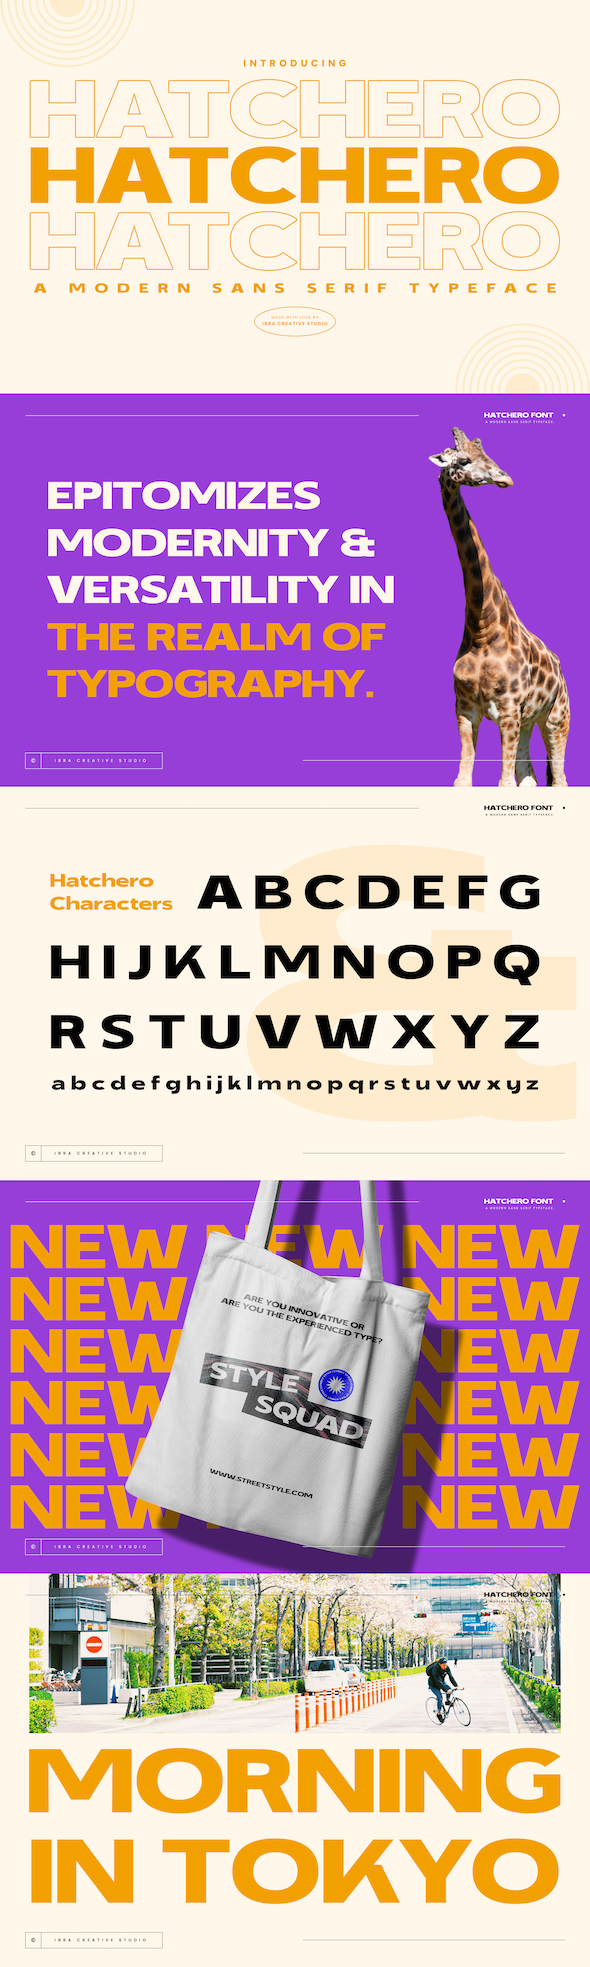 [DOWNLOAD]Hatchero - A Modern Sans Serif Typeface